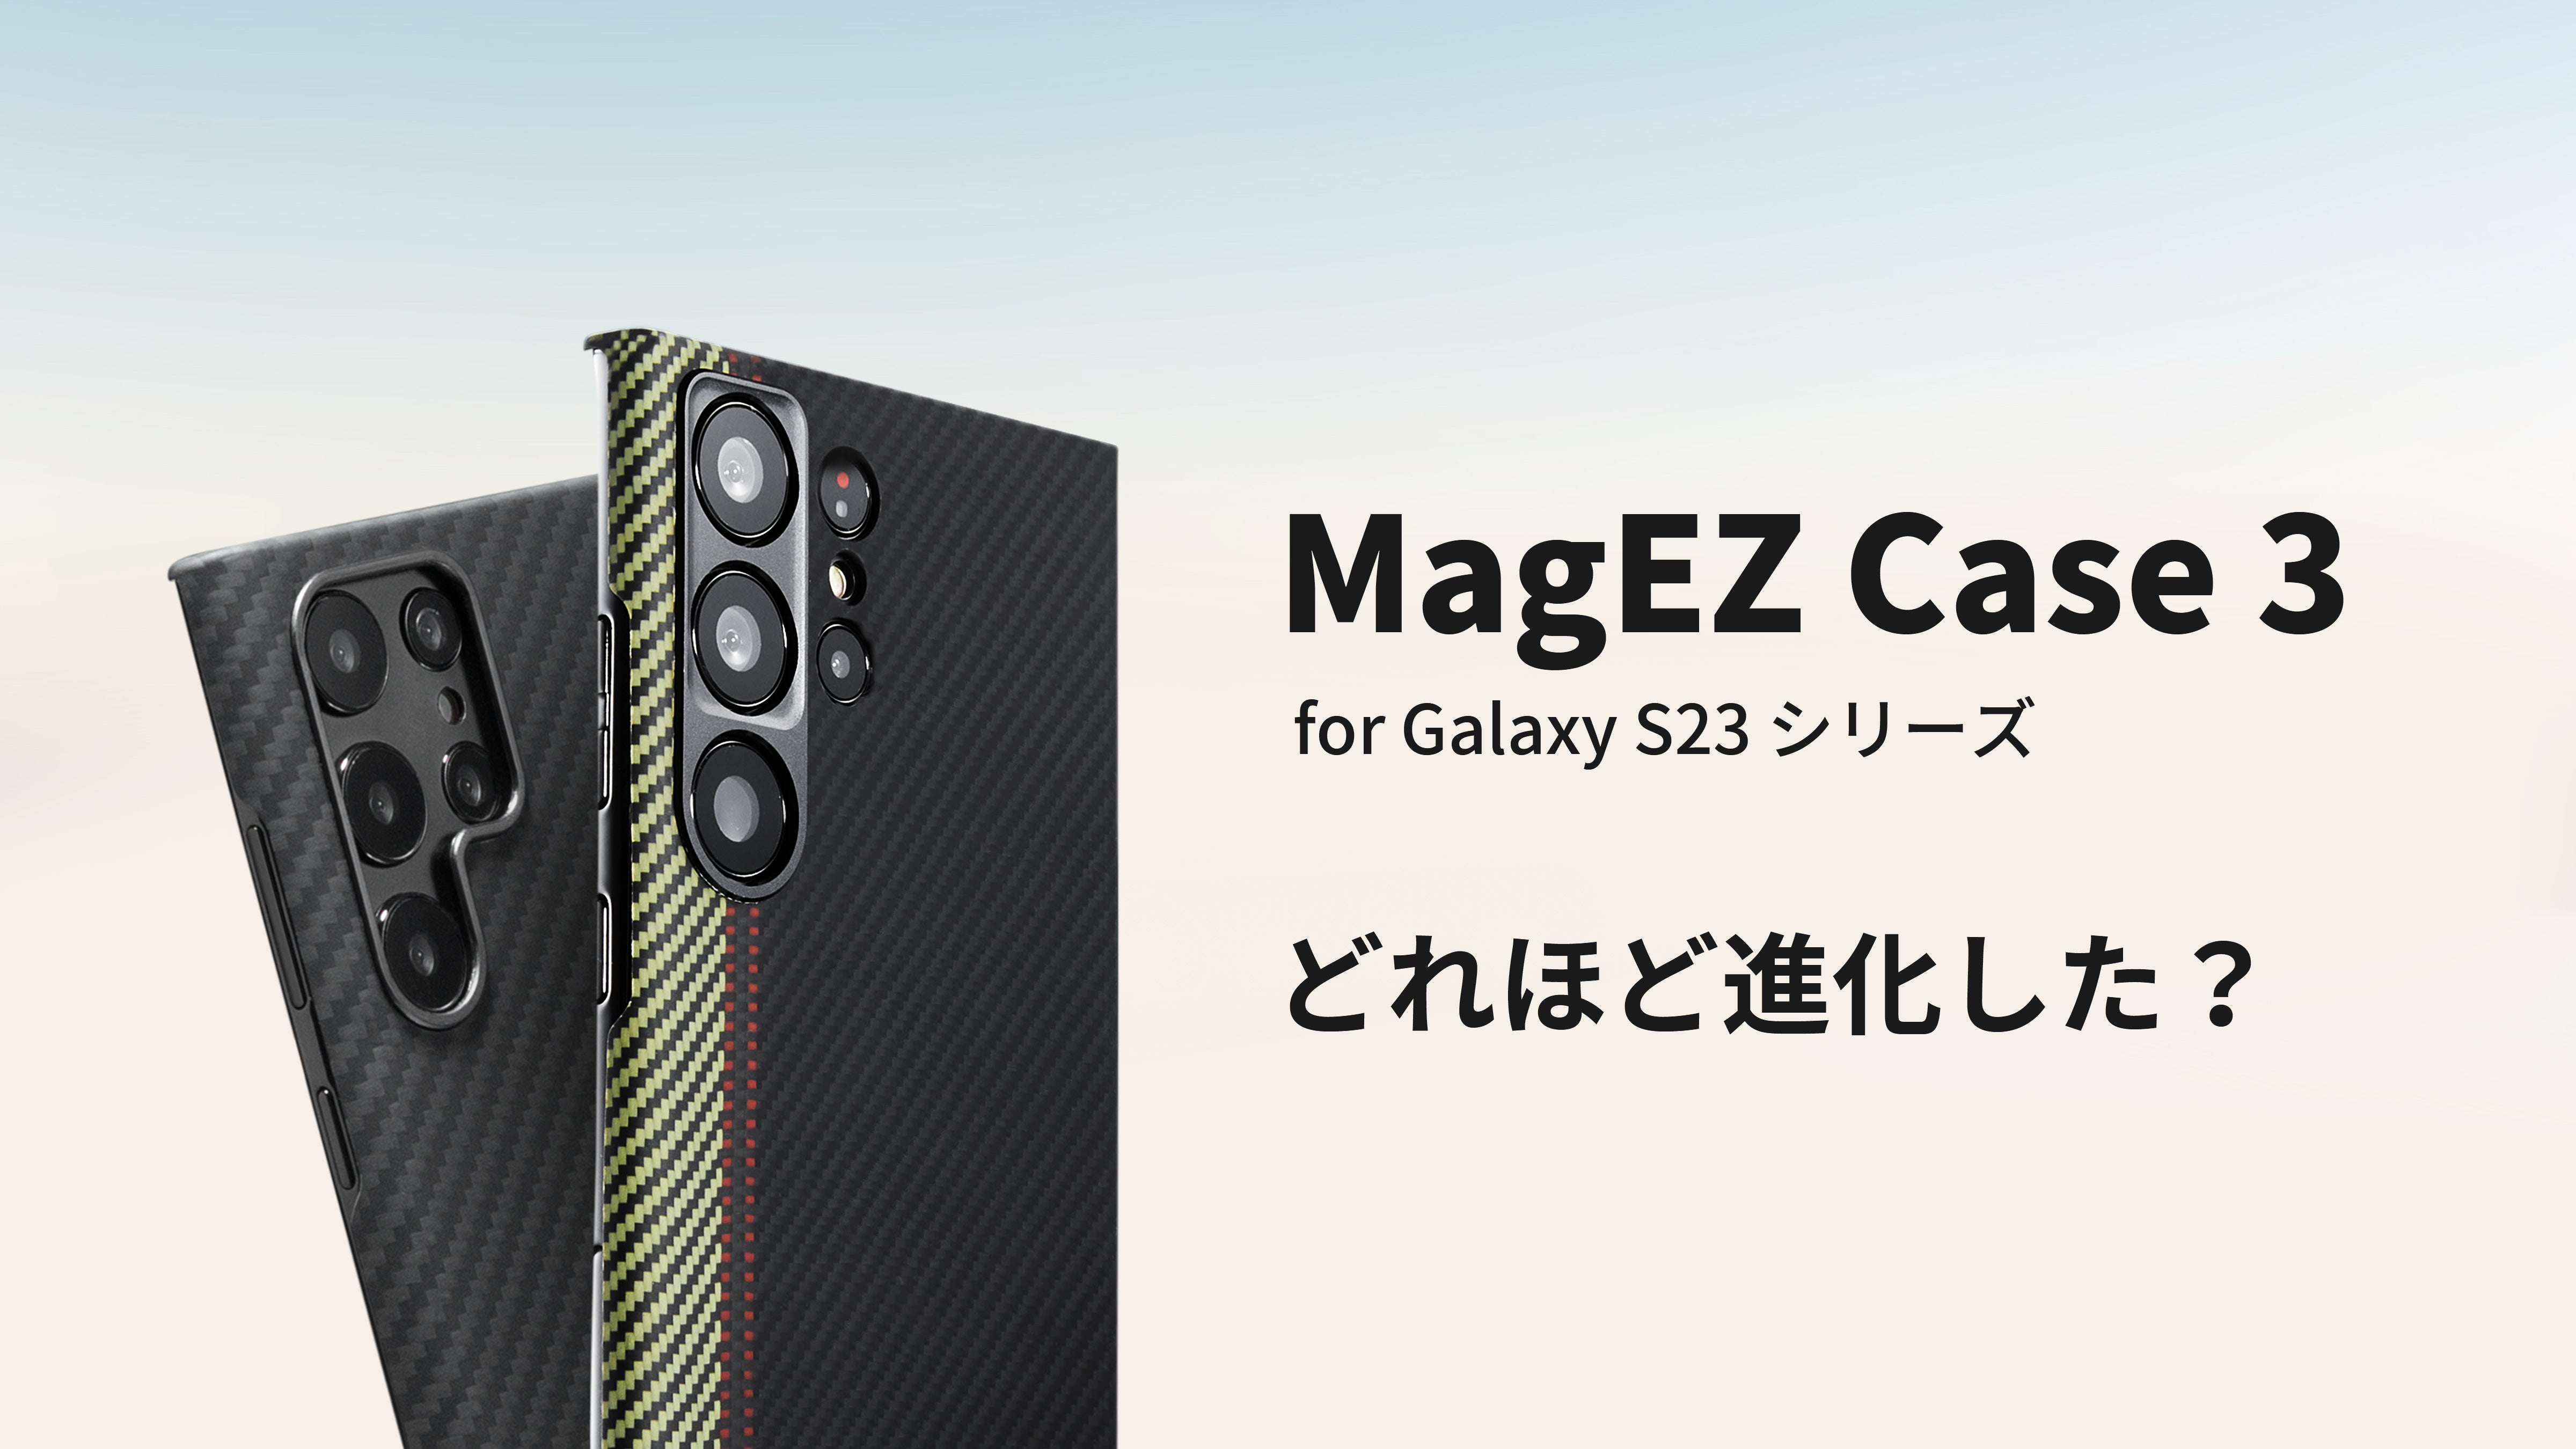 Galaxy S23シリーズ用MagEZ Case 3は、どれほど進化した？ – PITAKA Japan